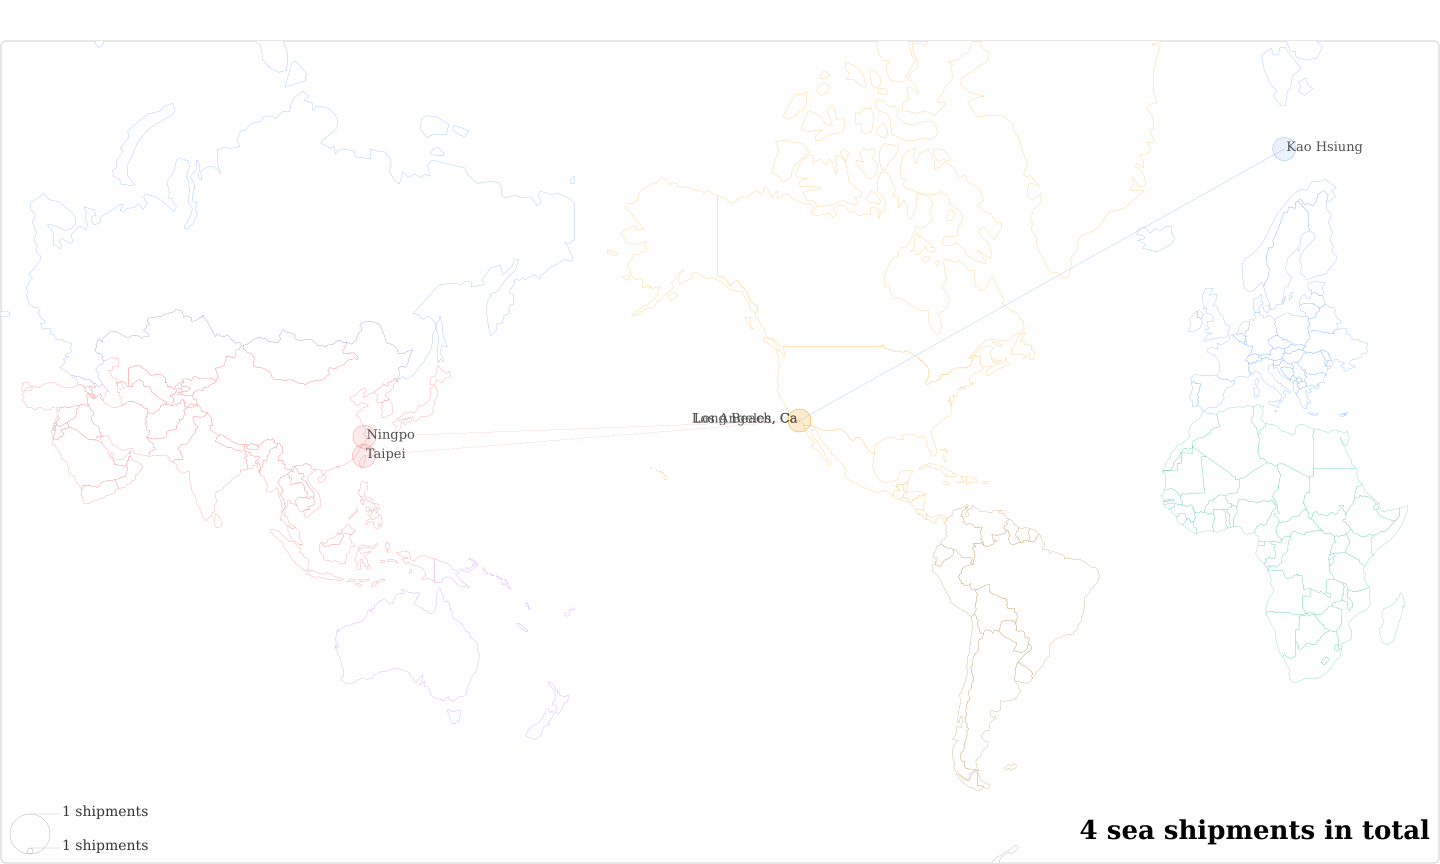 Sunteko's Imports Per Country Map